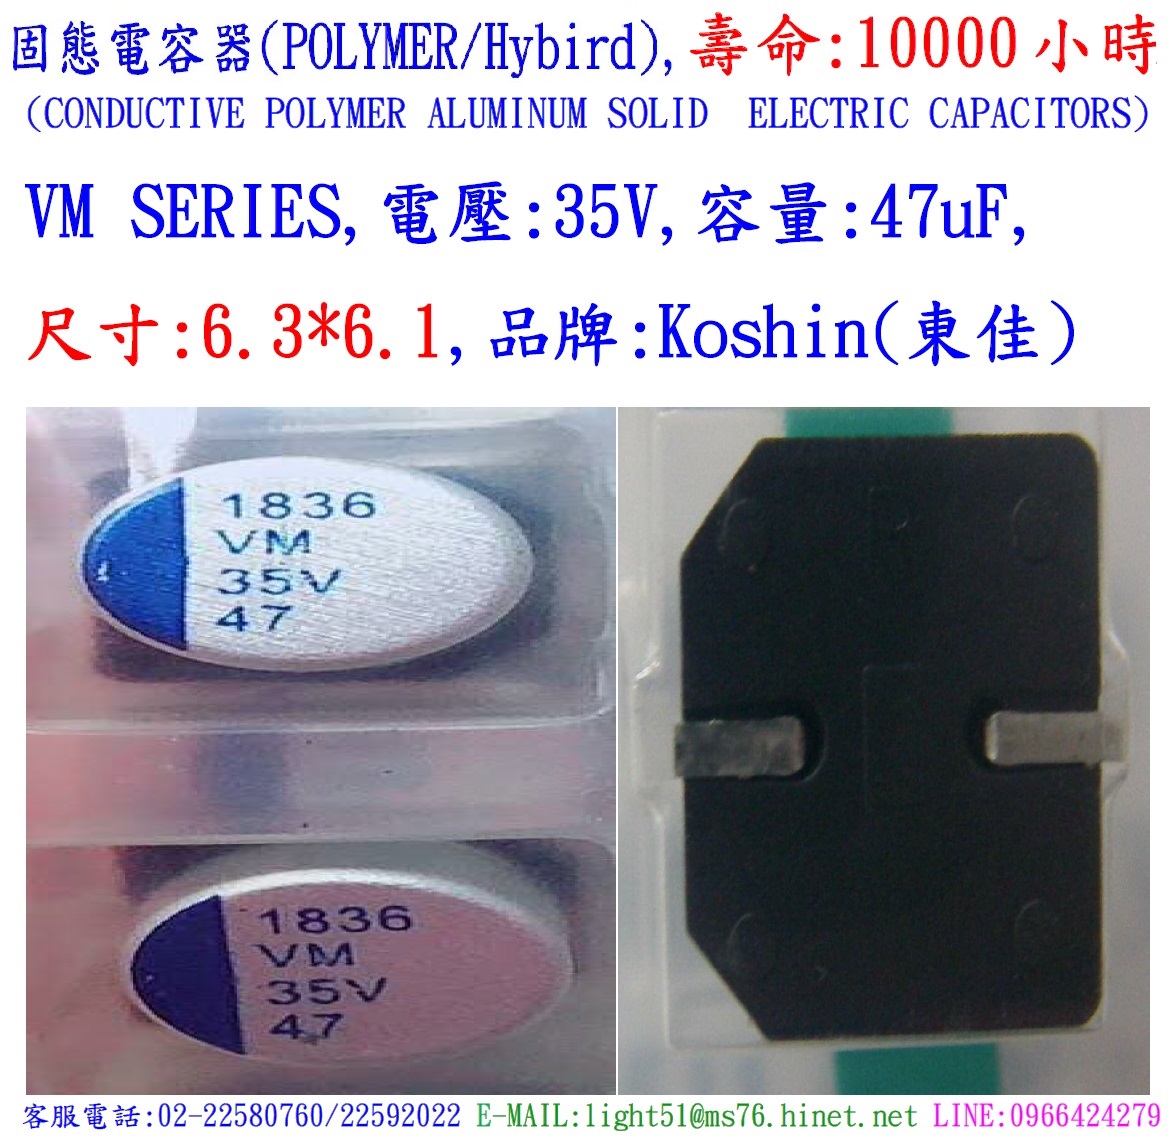 VM,35V,47uF,尺寸:6.3X6.1,固態電容器(POLYMER/Hybird),壽命10000小時,SMD Type,KOSHIN(東佳)